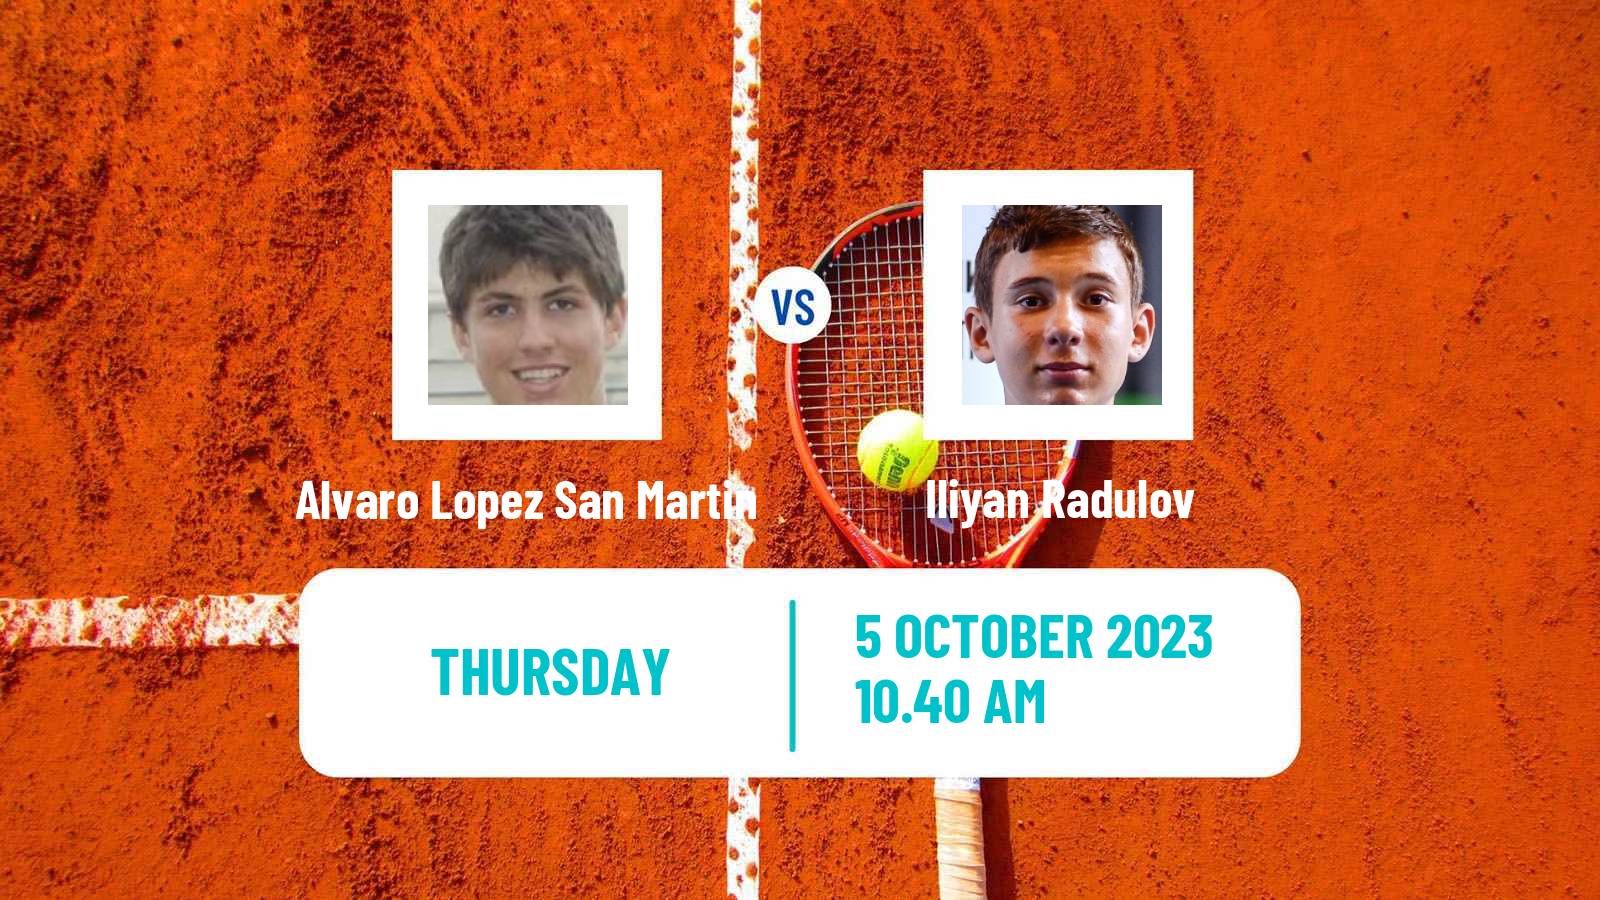 Tennis ITF M25 Zaragoza Men Alvaro Lopez San Martin - Iliyan Radulov